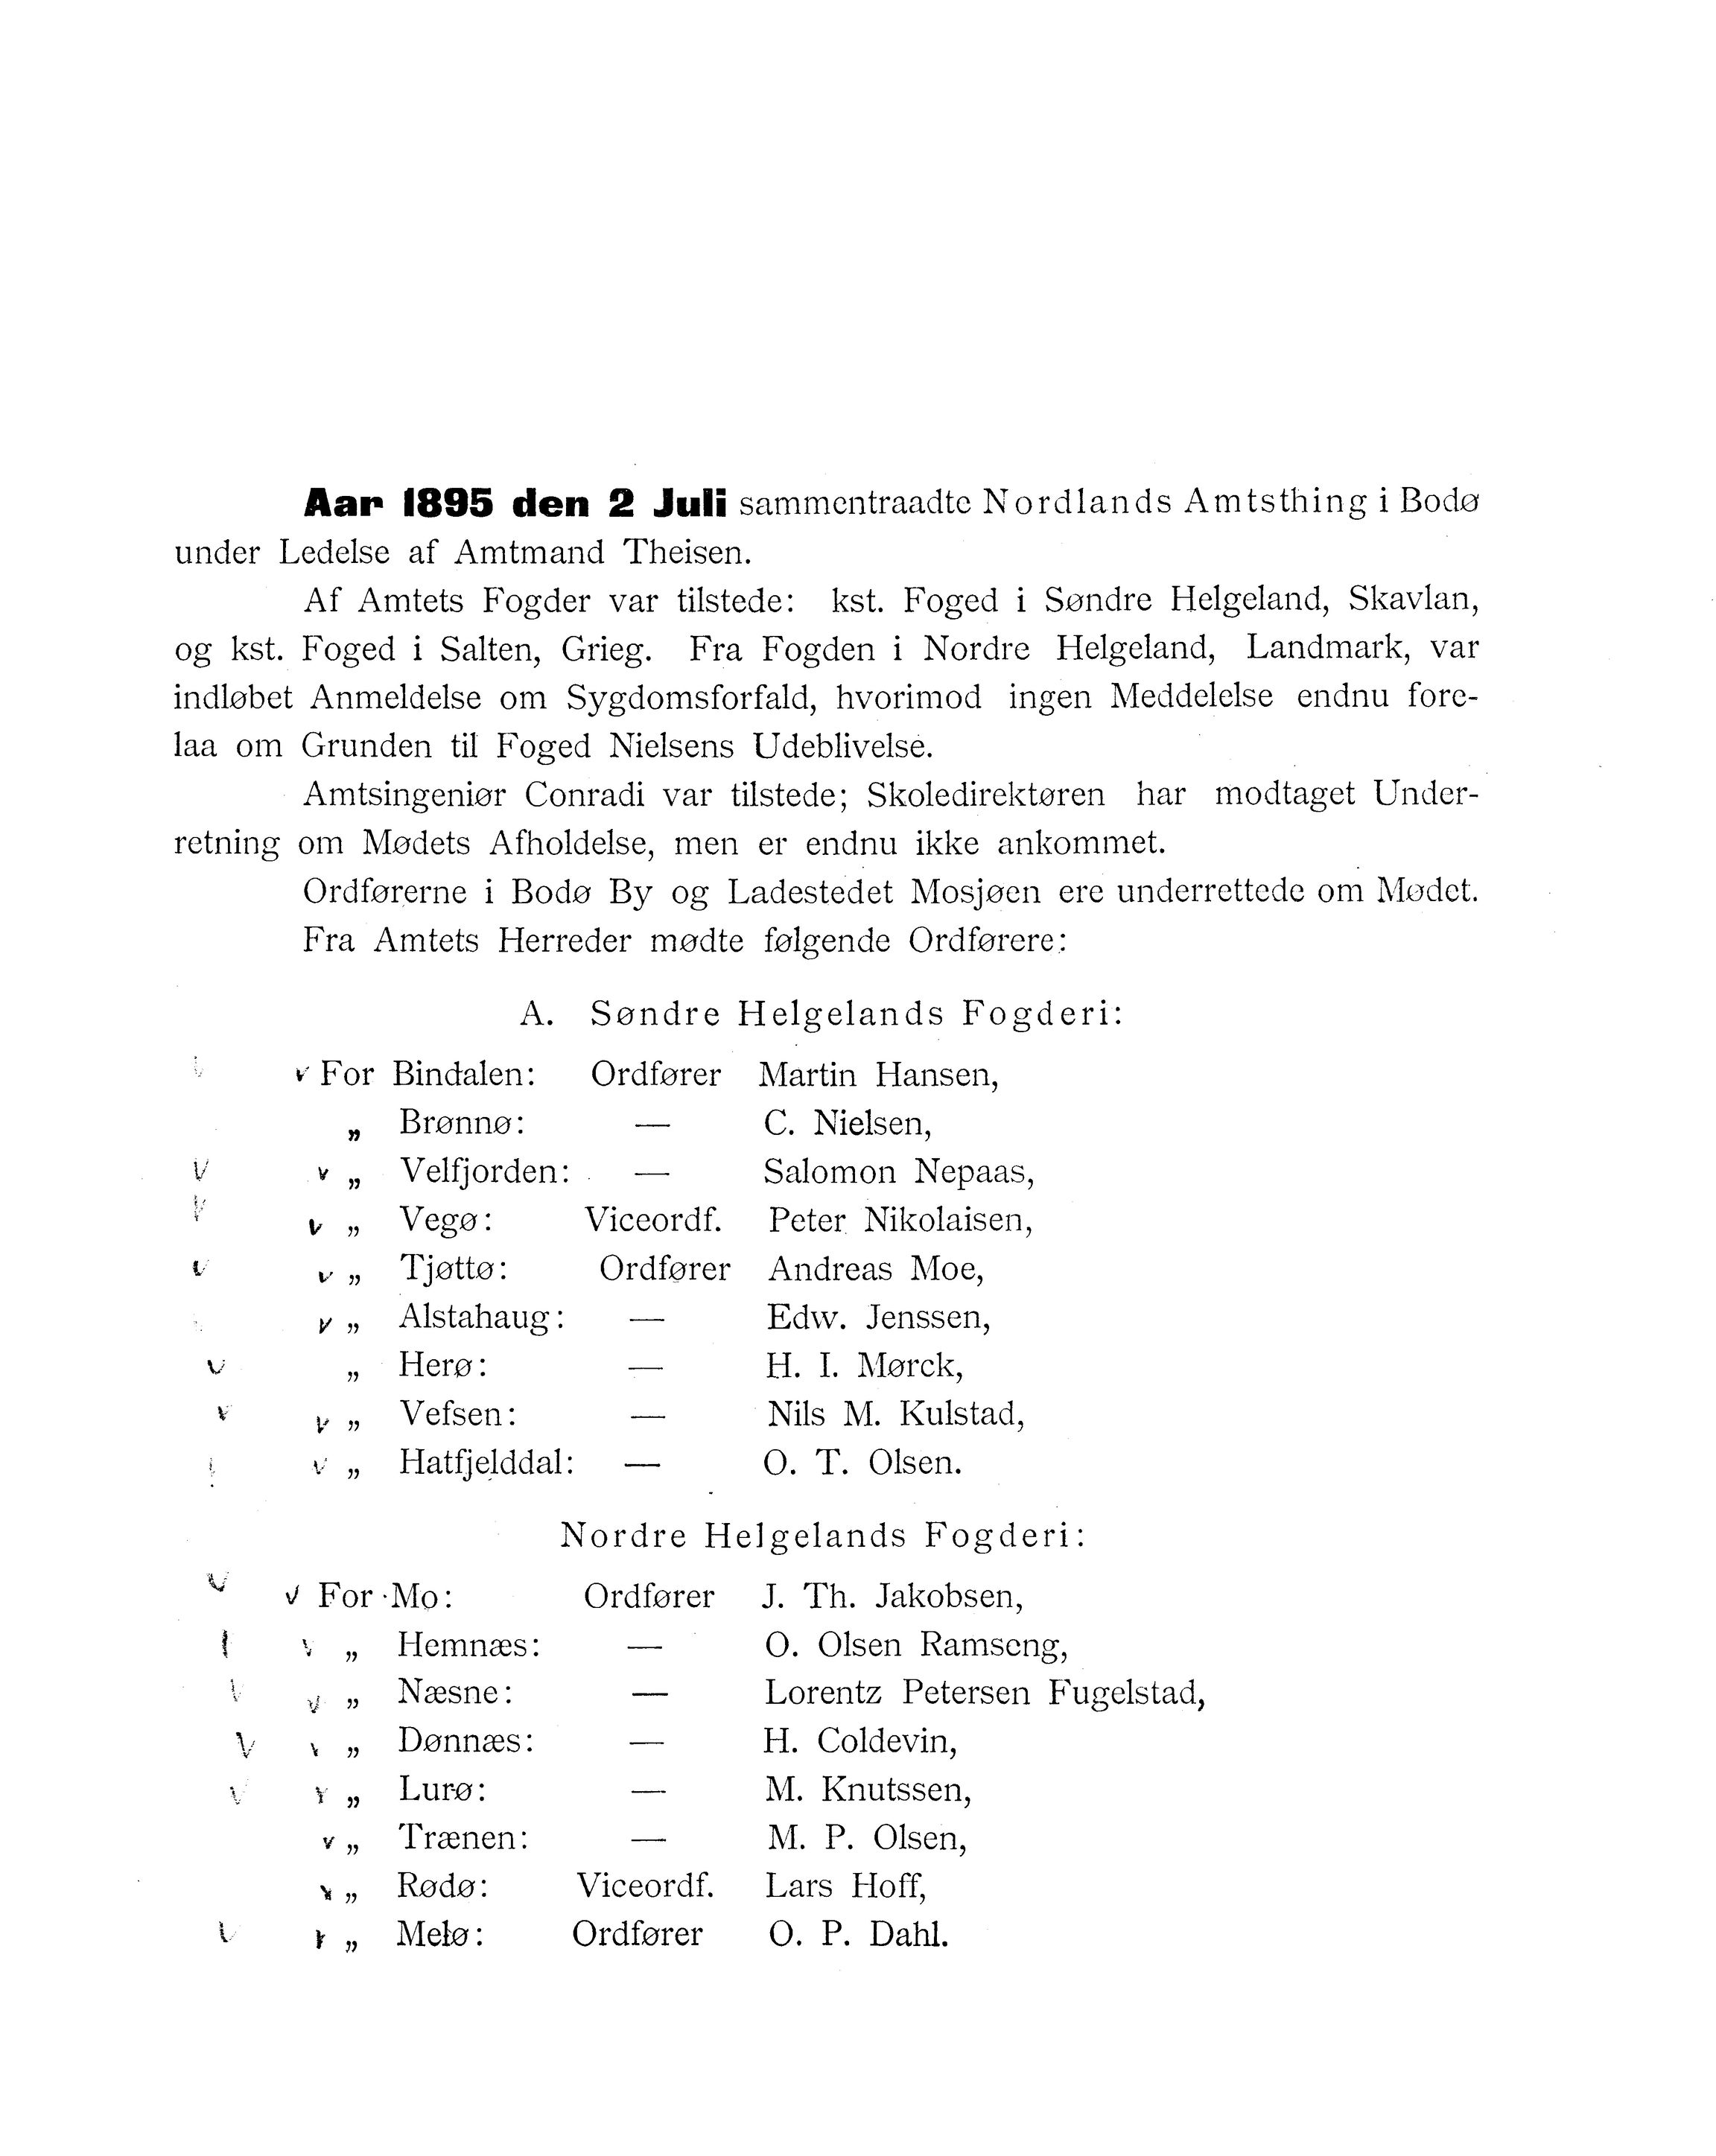 AIN, Nordland Fylkeskommune. Fylkestinget, A/Ac/L0018: Fylkestingsforhandlinger 1895, 1895